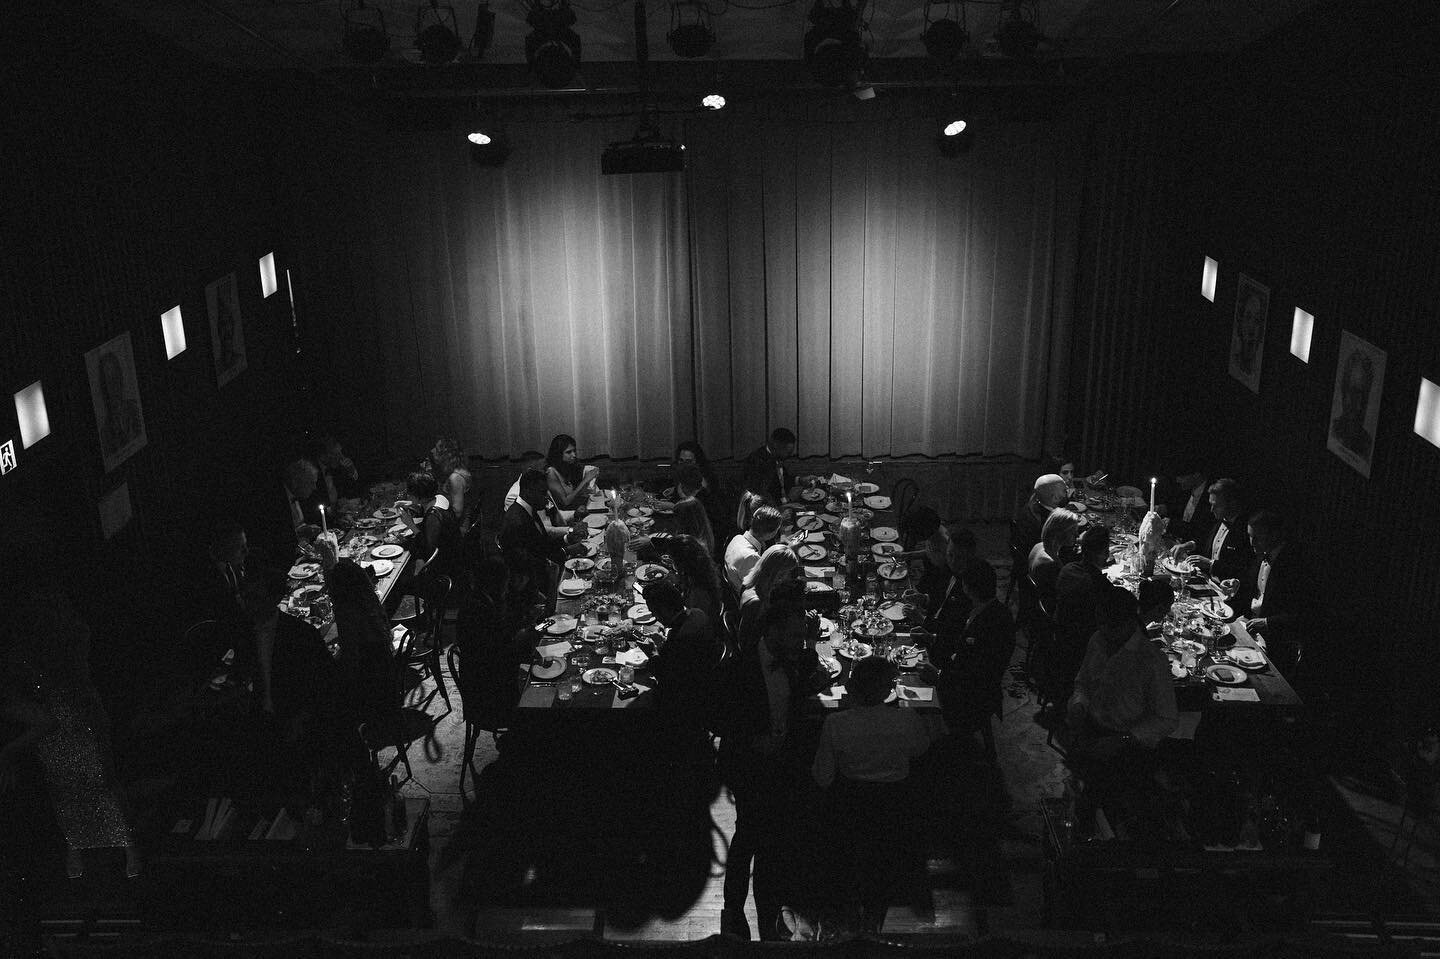 The cinema, 2024

Venue: @restauranthubert 

#sydneyweddingphotographer #sydneyweddingphotography #SydneyWedding
#SydneyWeddings #WeddingPlanner
#SydneyWeddingVenue #SydneyEventPlanner #luxurywedding #luxuryweddingphotographer #Wedding #Engagements #